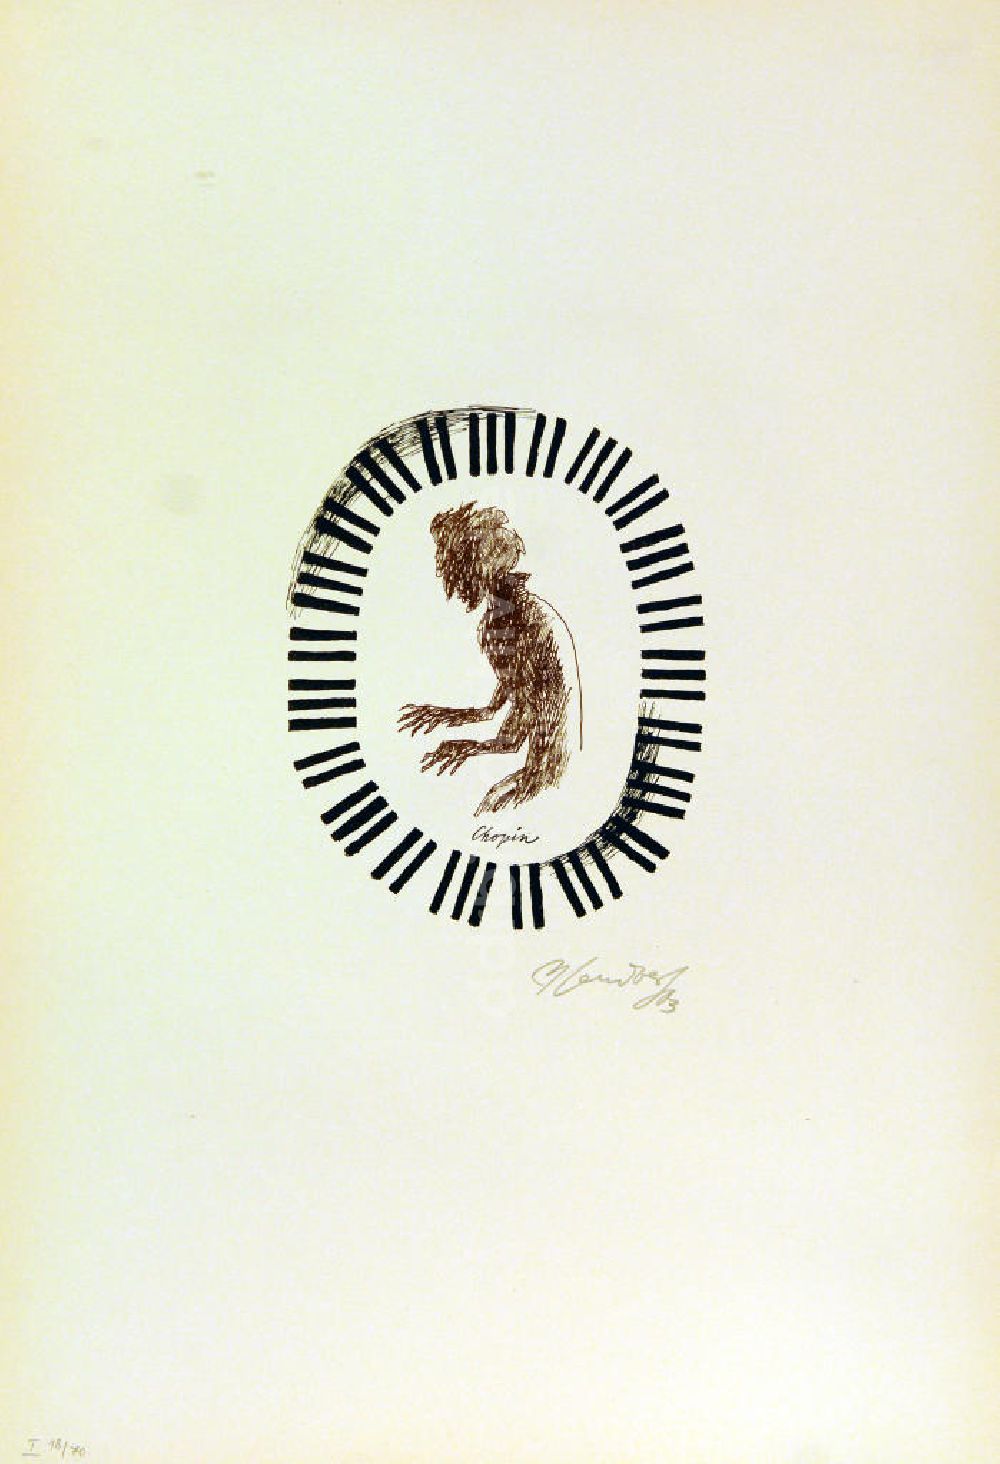 DDR-Bildarchiv: Berlin - Grafik von Herbert Sandberg über Frédéric (Fryderyk) Chopin 1963